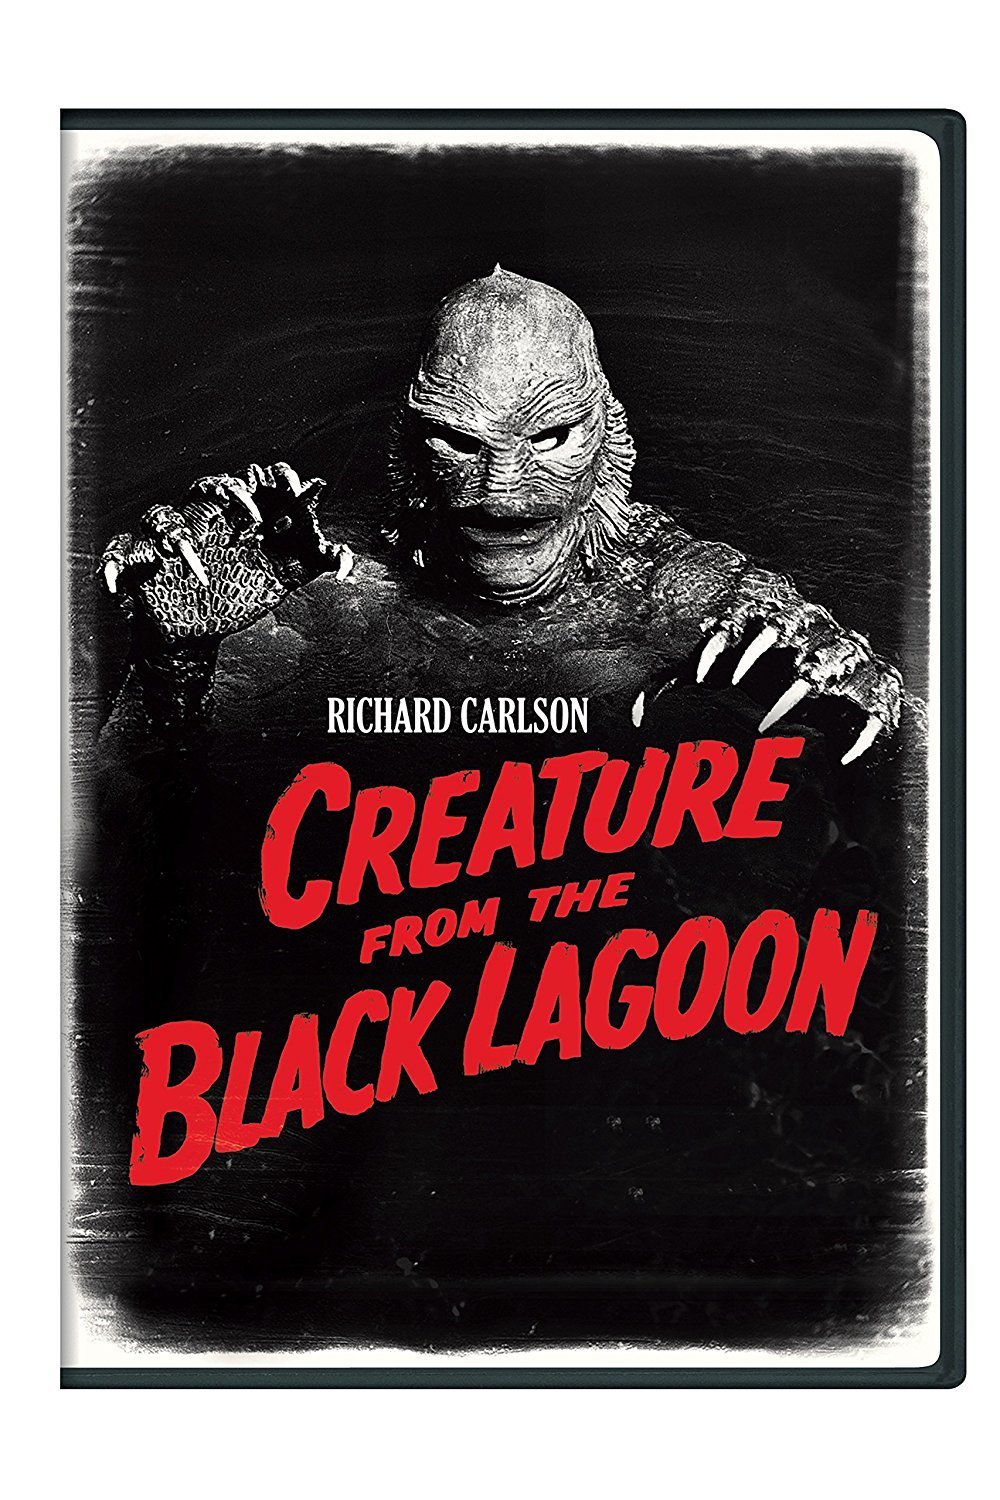 Creature from the Black Lagoon (1954) starring Richard Carlson, Julia Adams